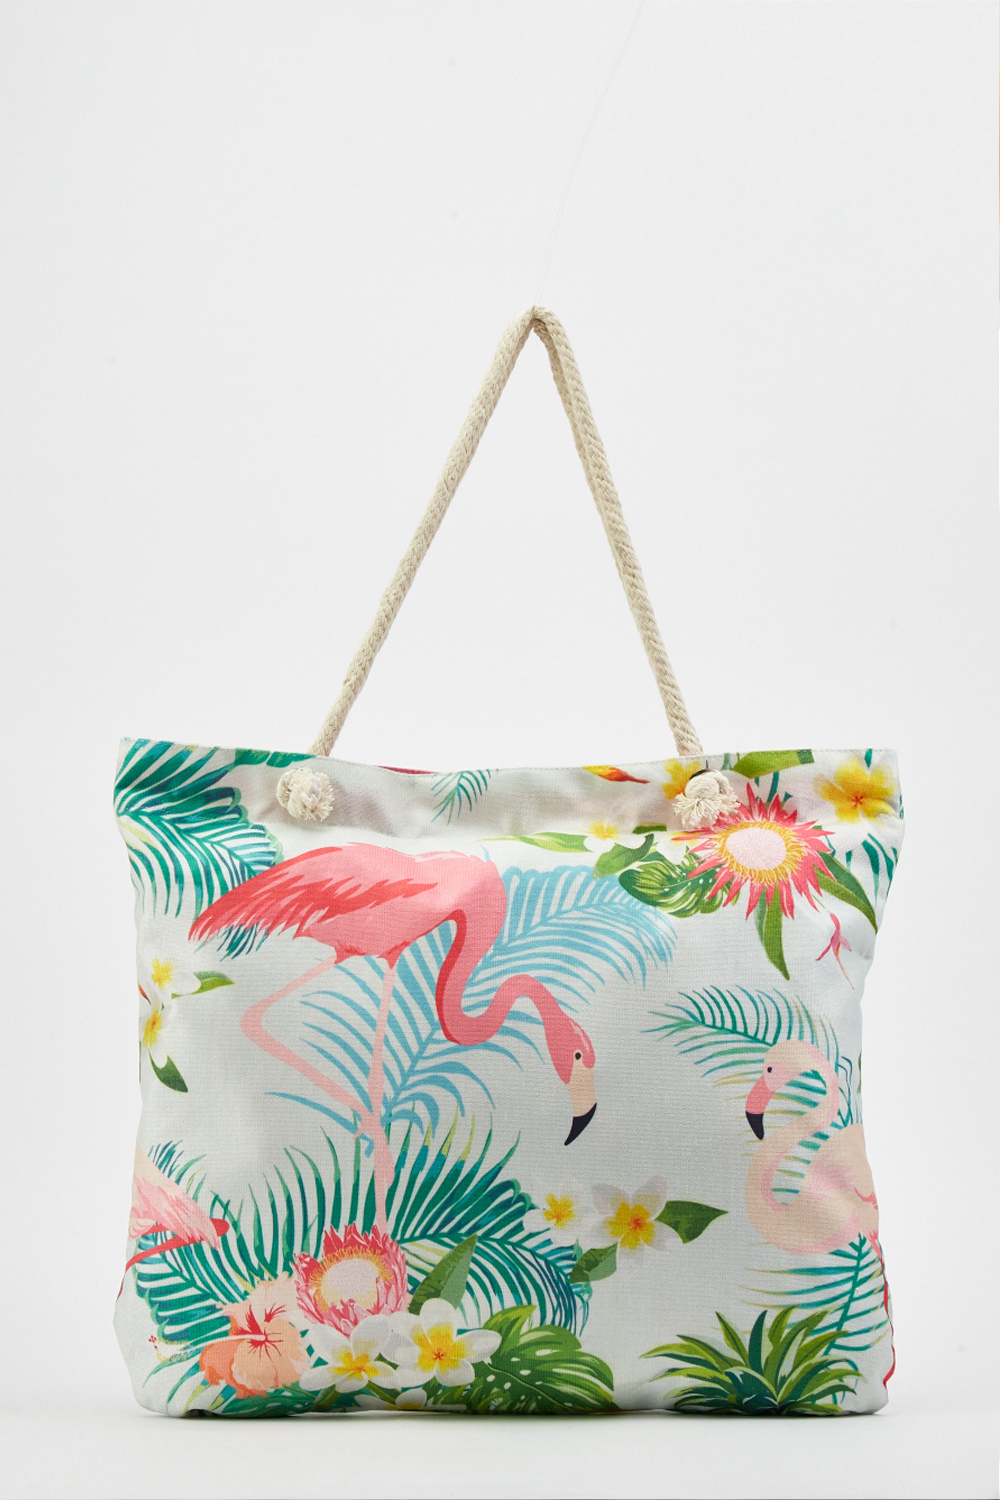 Tropical Flamingo Print Beach Bag - Just $7